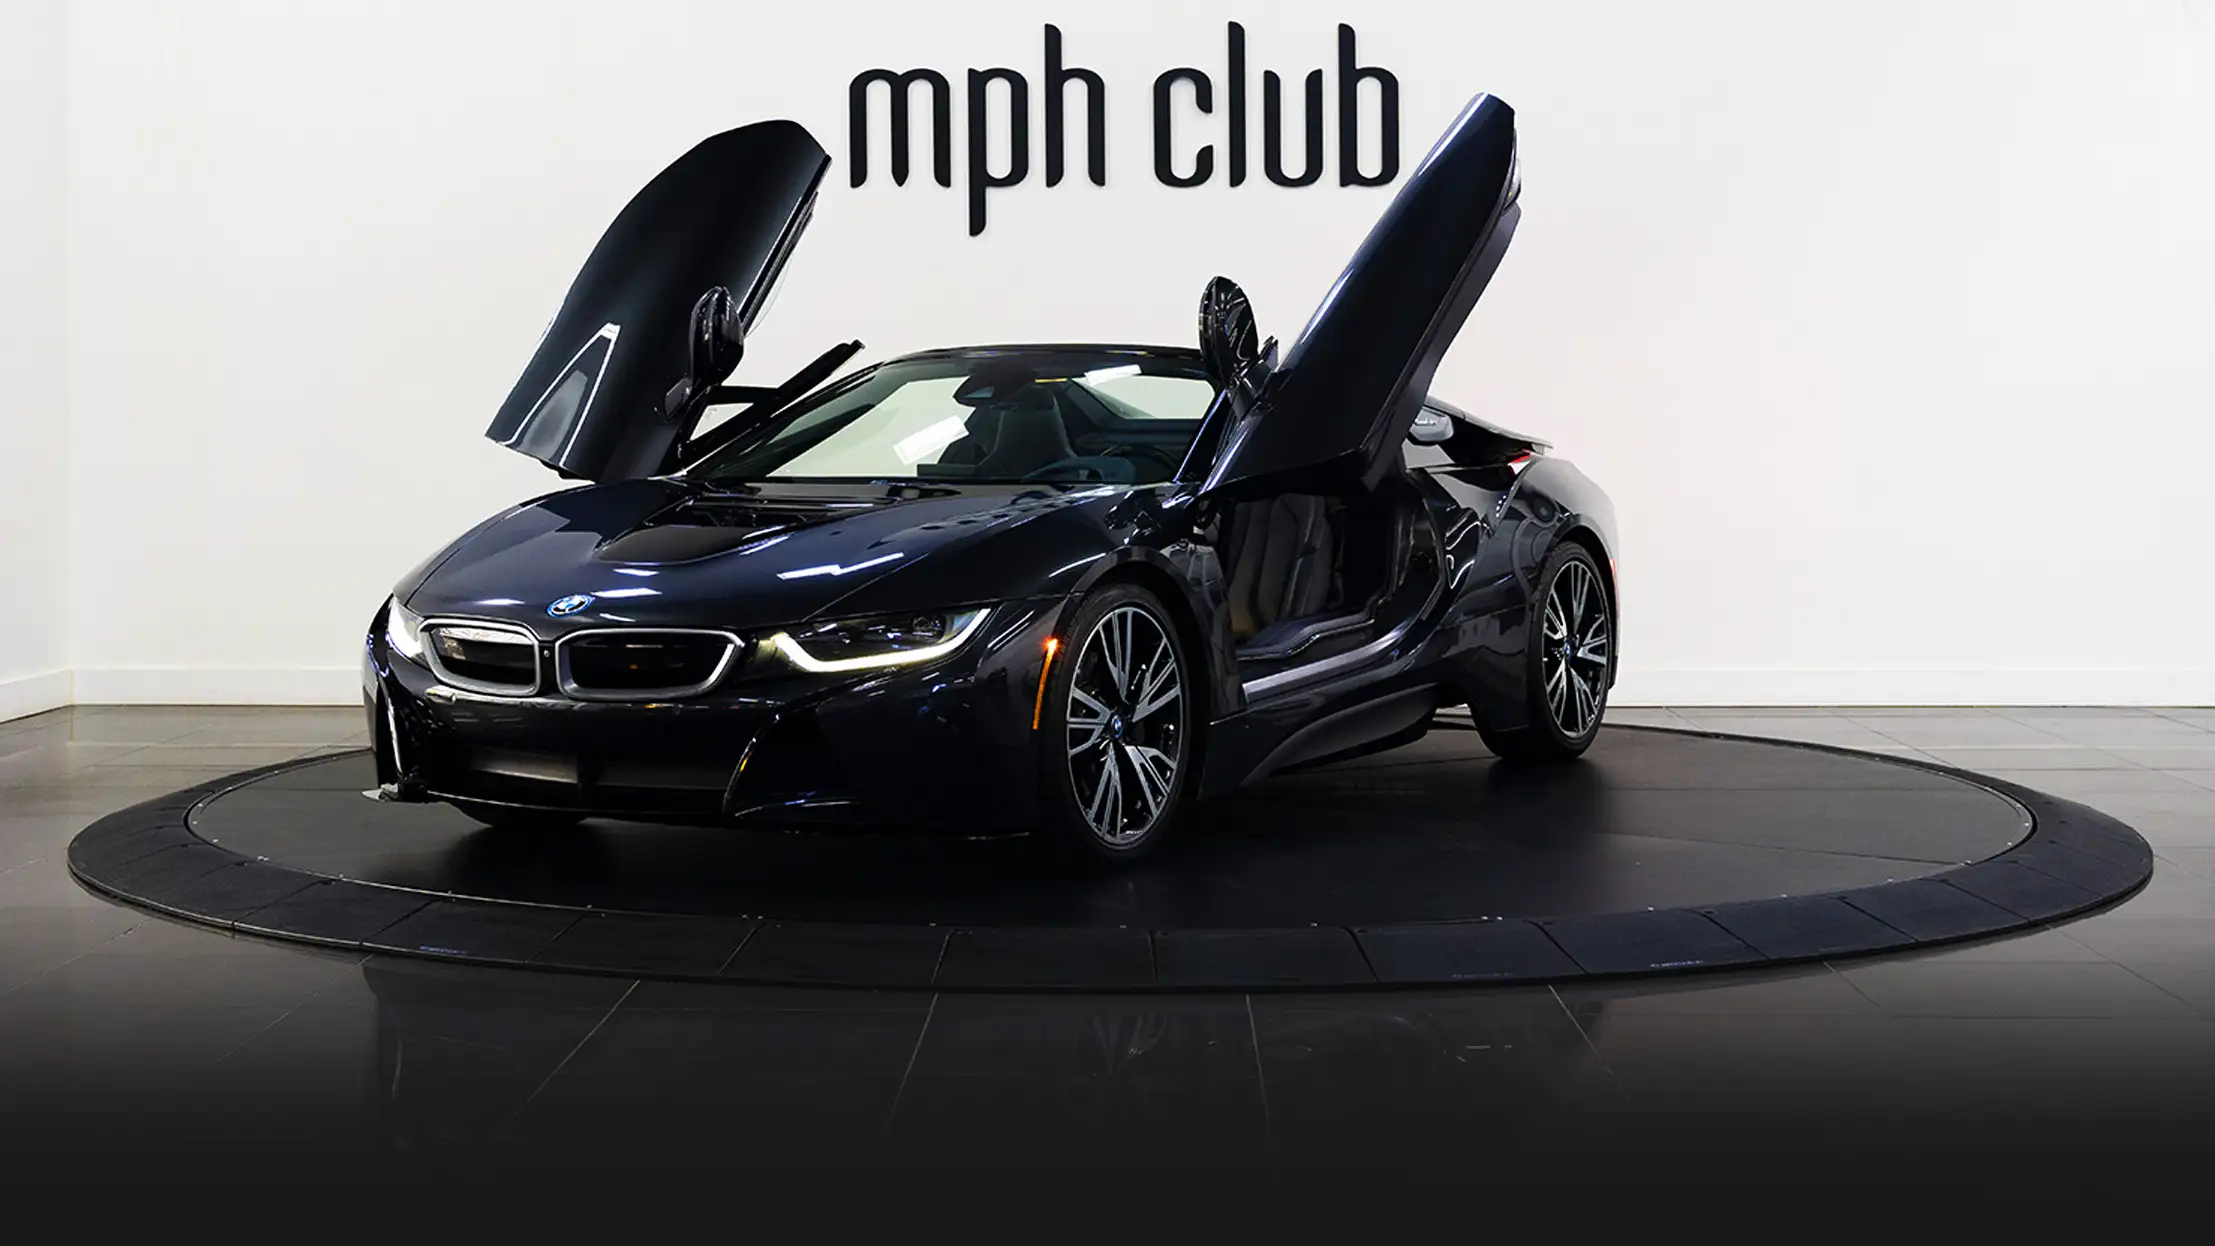 Grey on black BMW I8 rental profile view rszd mph club